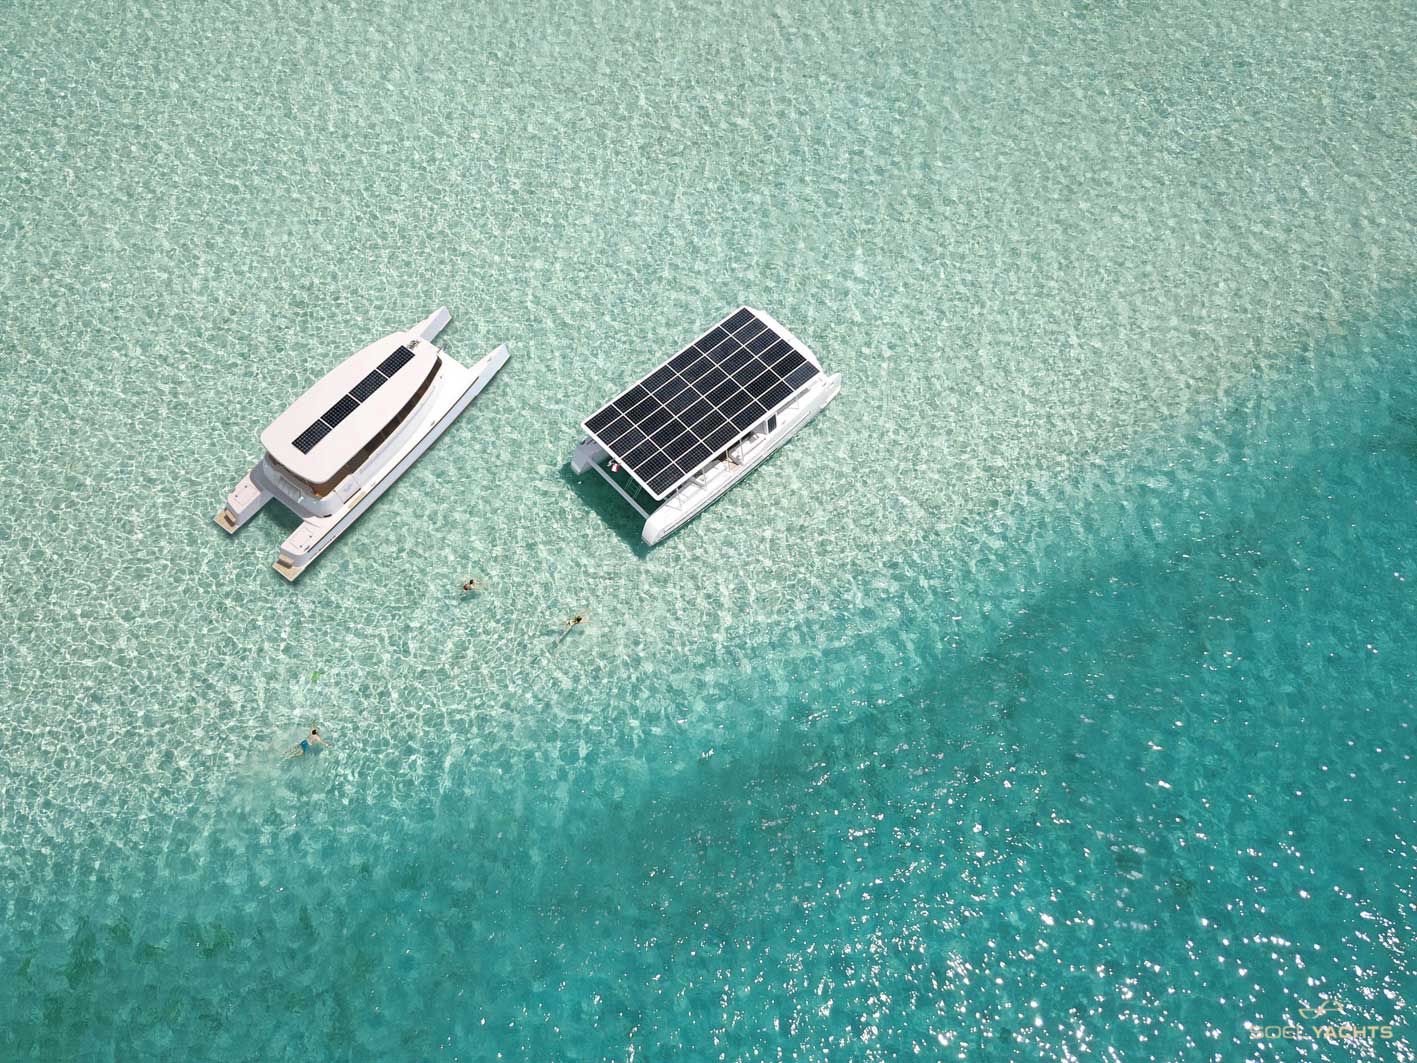 Soel Yachts - solar electric boats-8 - boat shopping